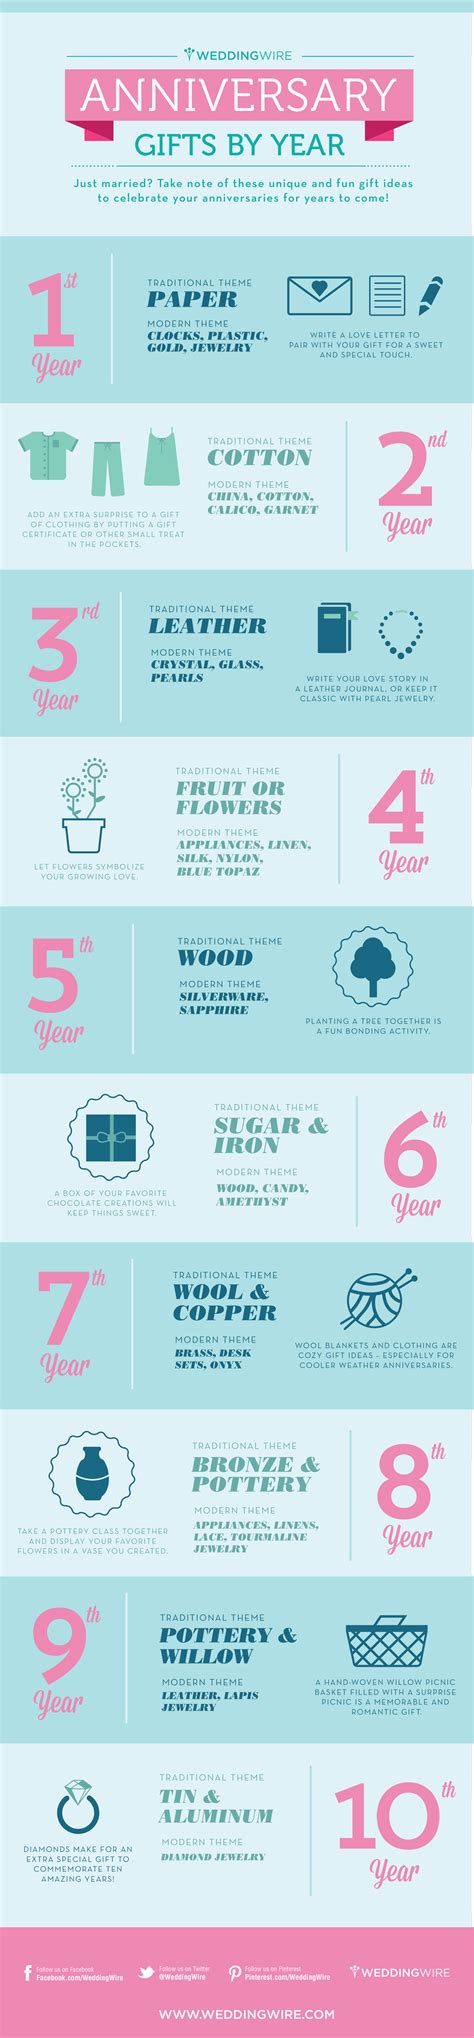 Anniversary gifts by year hallmark ideas inspiration. Anniversary Gifts by Year Infographic